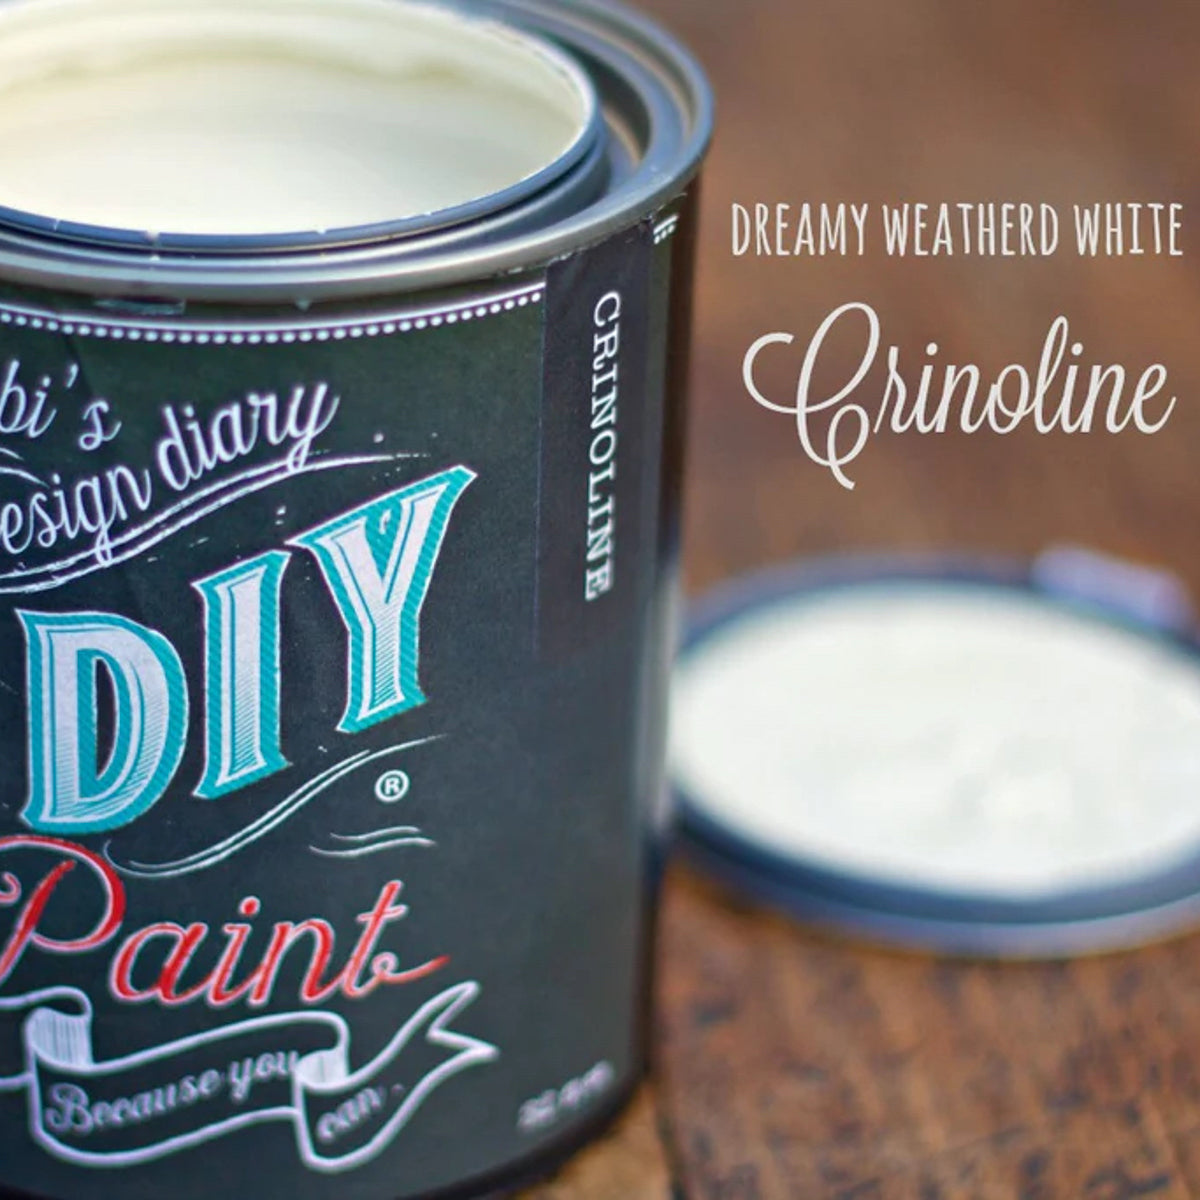 Crinoline by DIY Paint - Stockton Farm